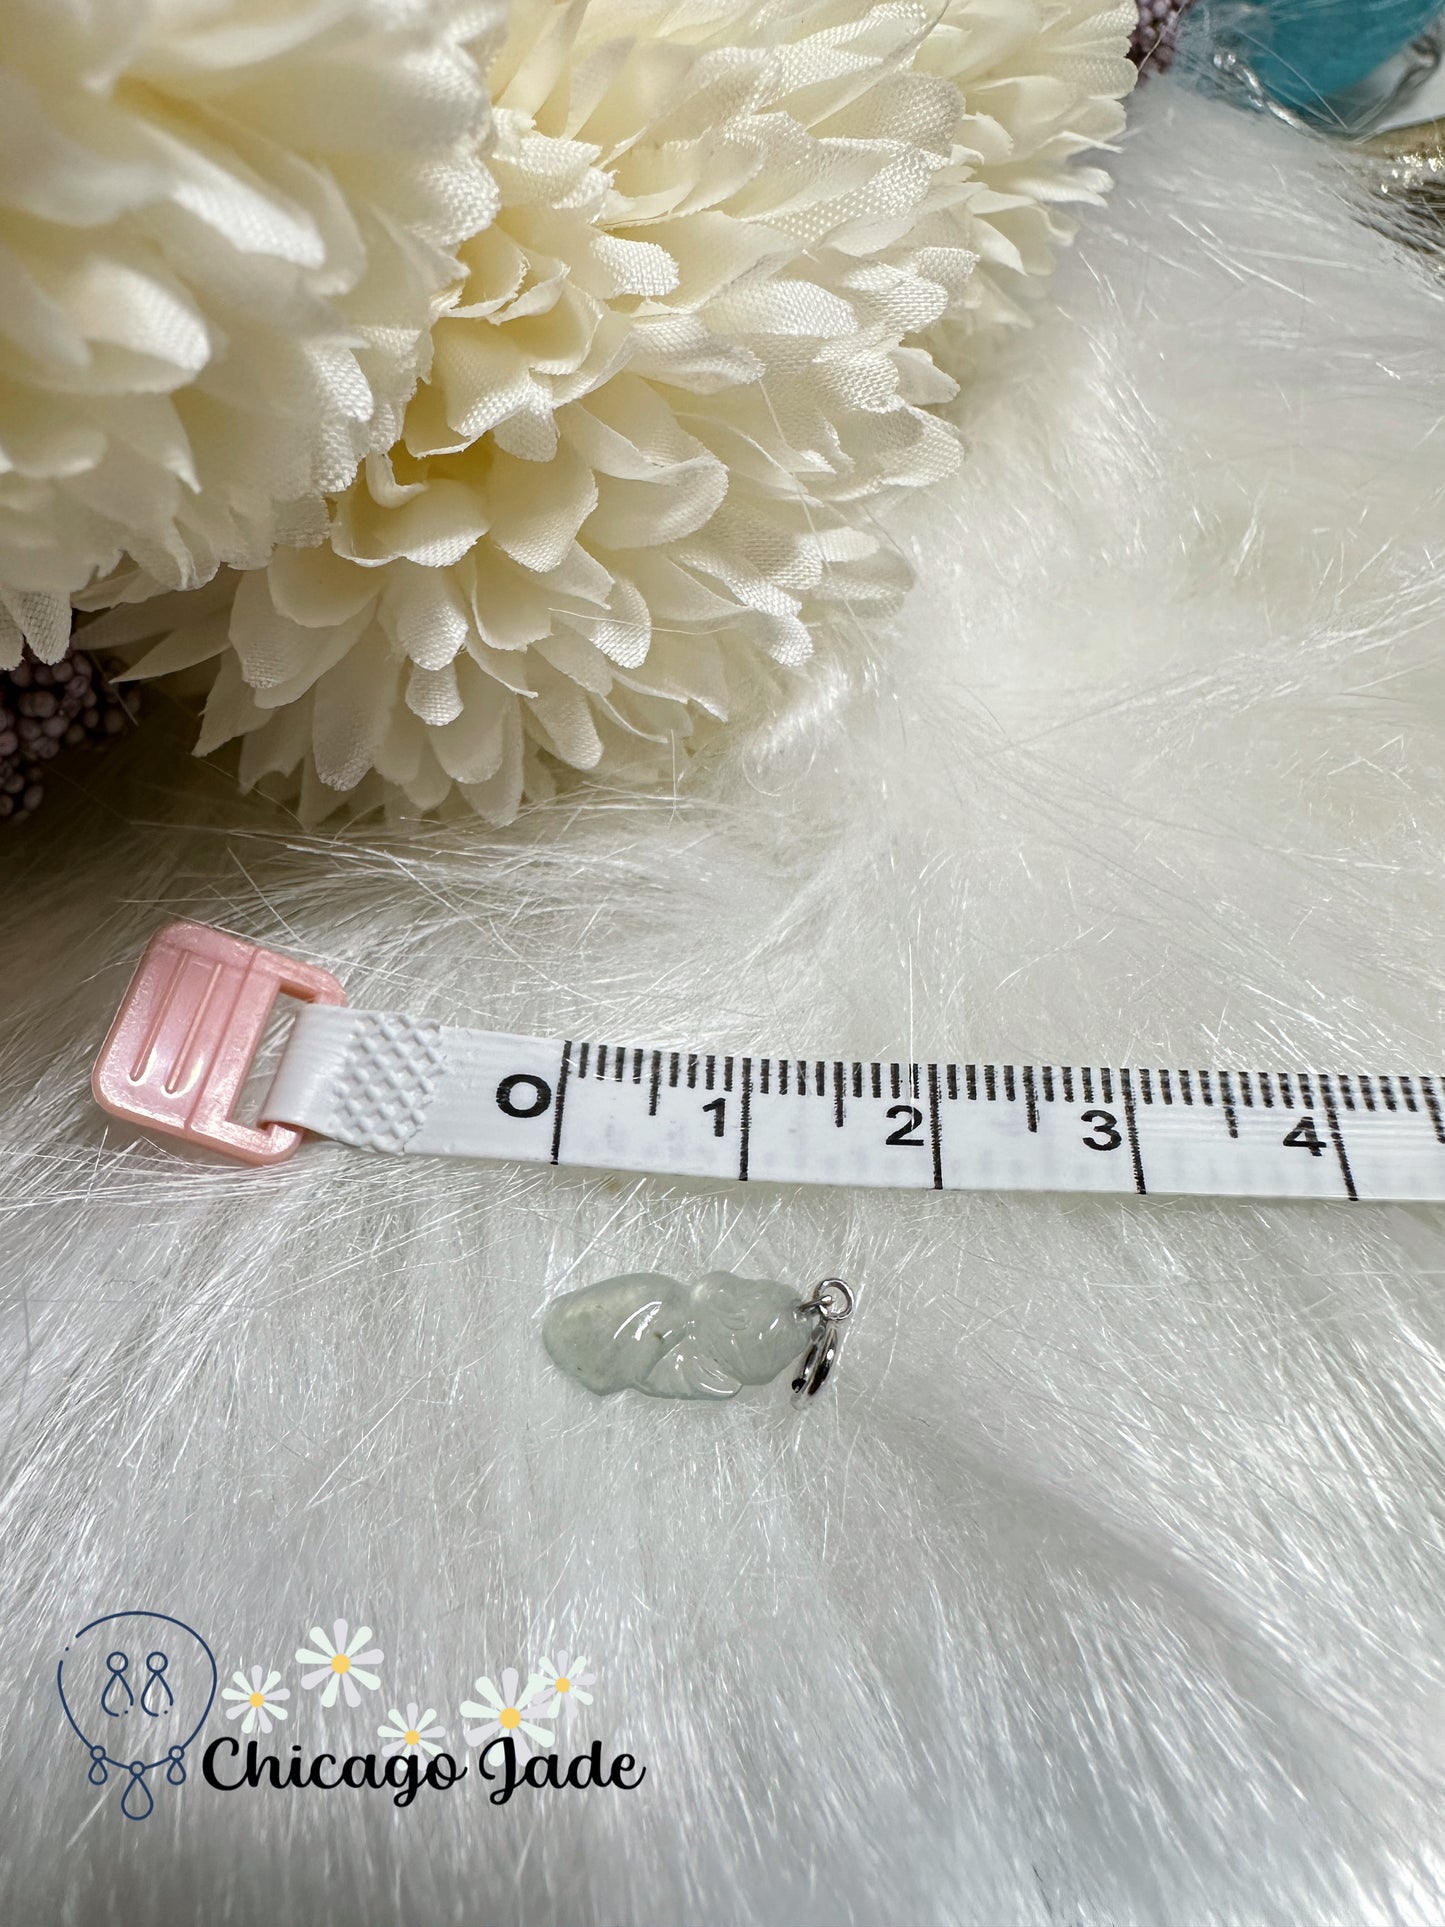 Highly translucent icy angel jadeite jade pendant - 18k gold multi-use handmade